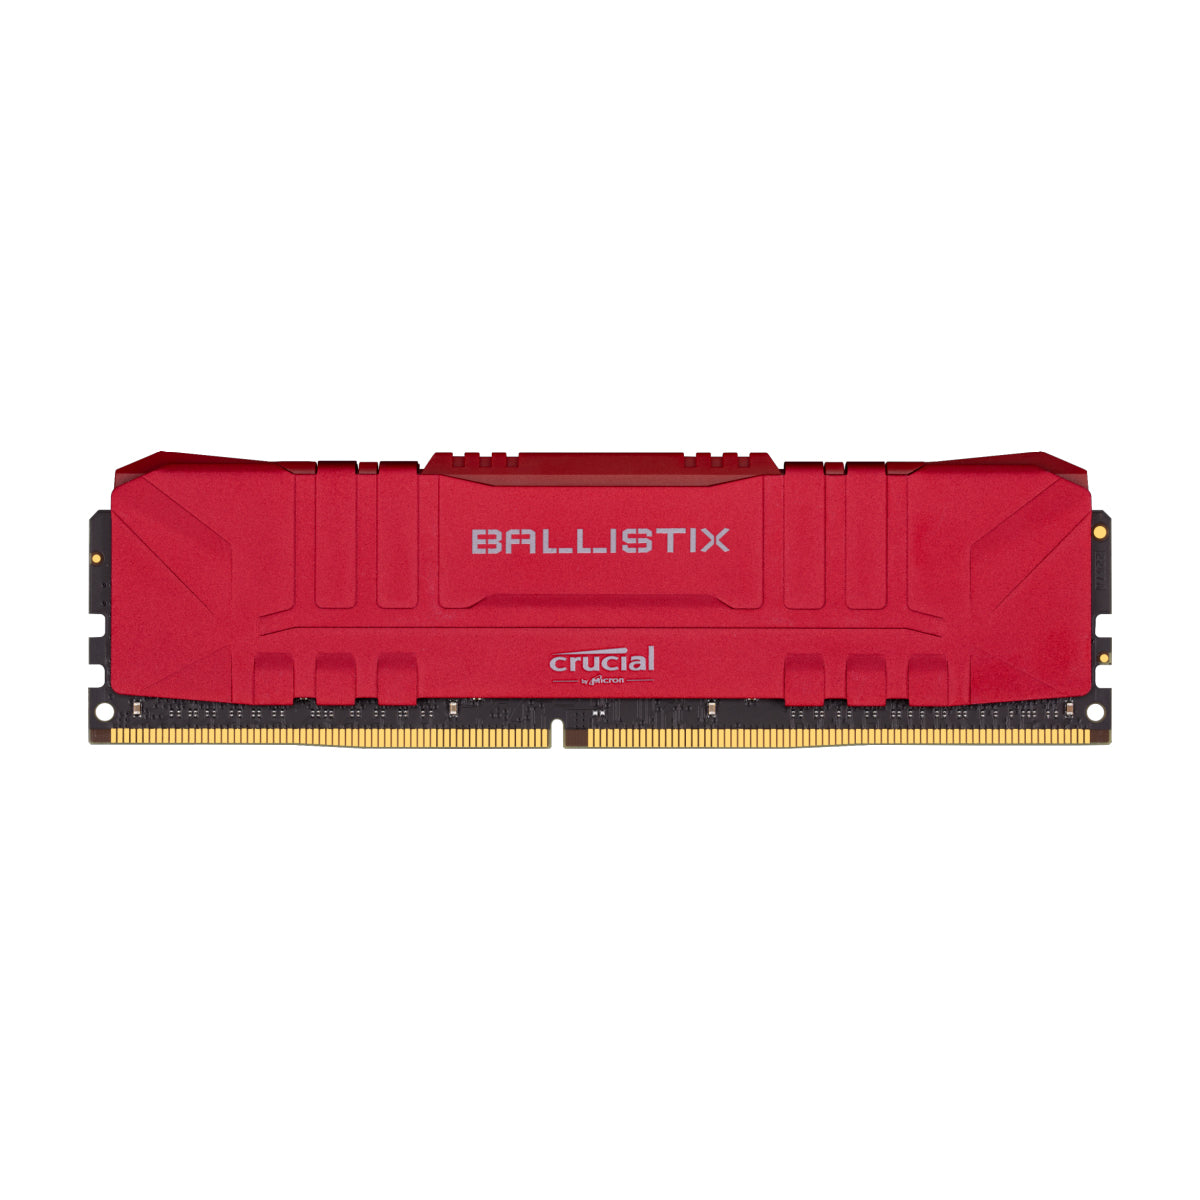 MEMORIA RAM CRUCIAL BALLISTIX 8GB DDR4 3000MHZ RED HEATSINK CL15 BL8G30C15U4R